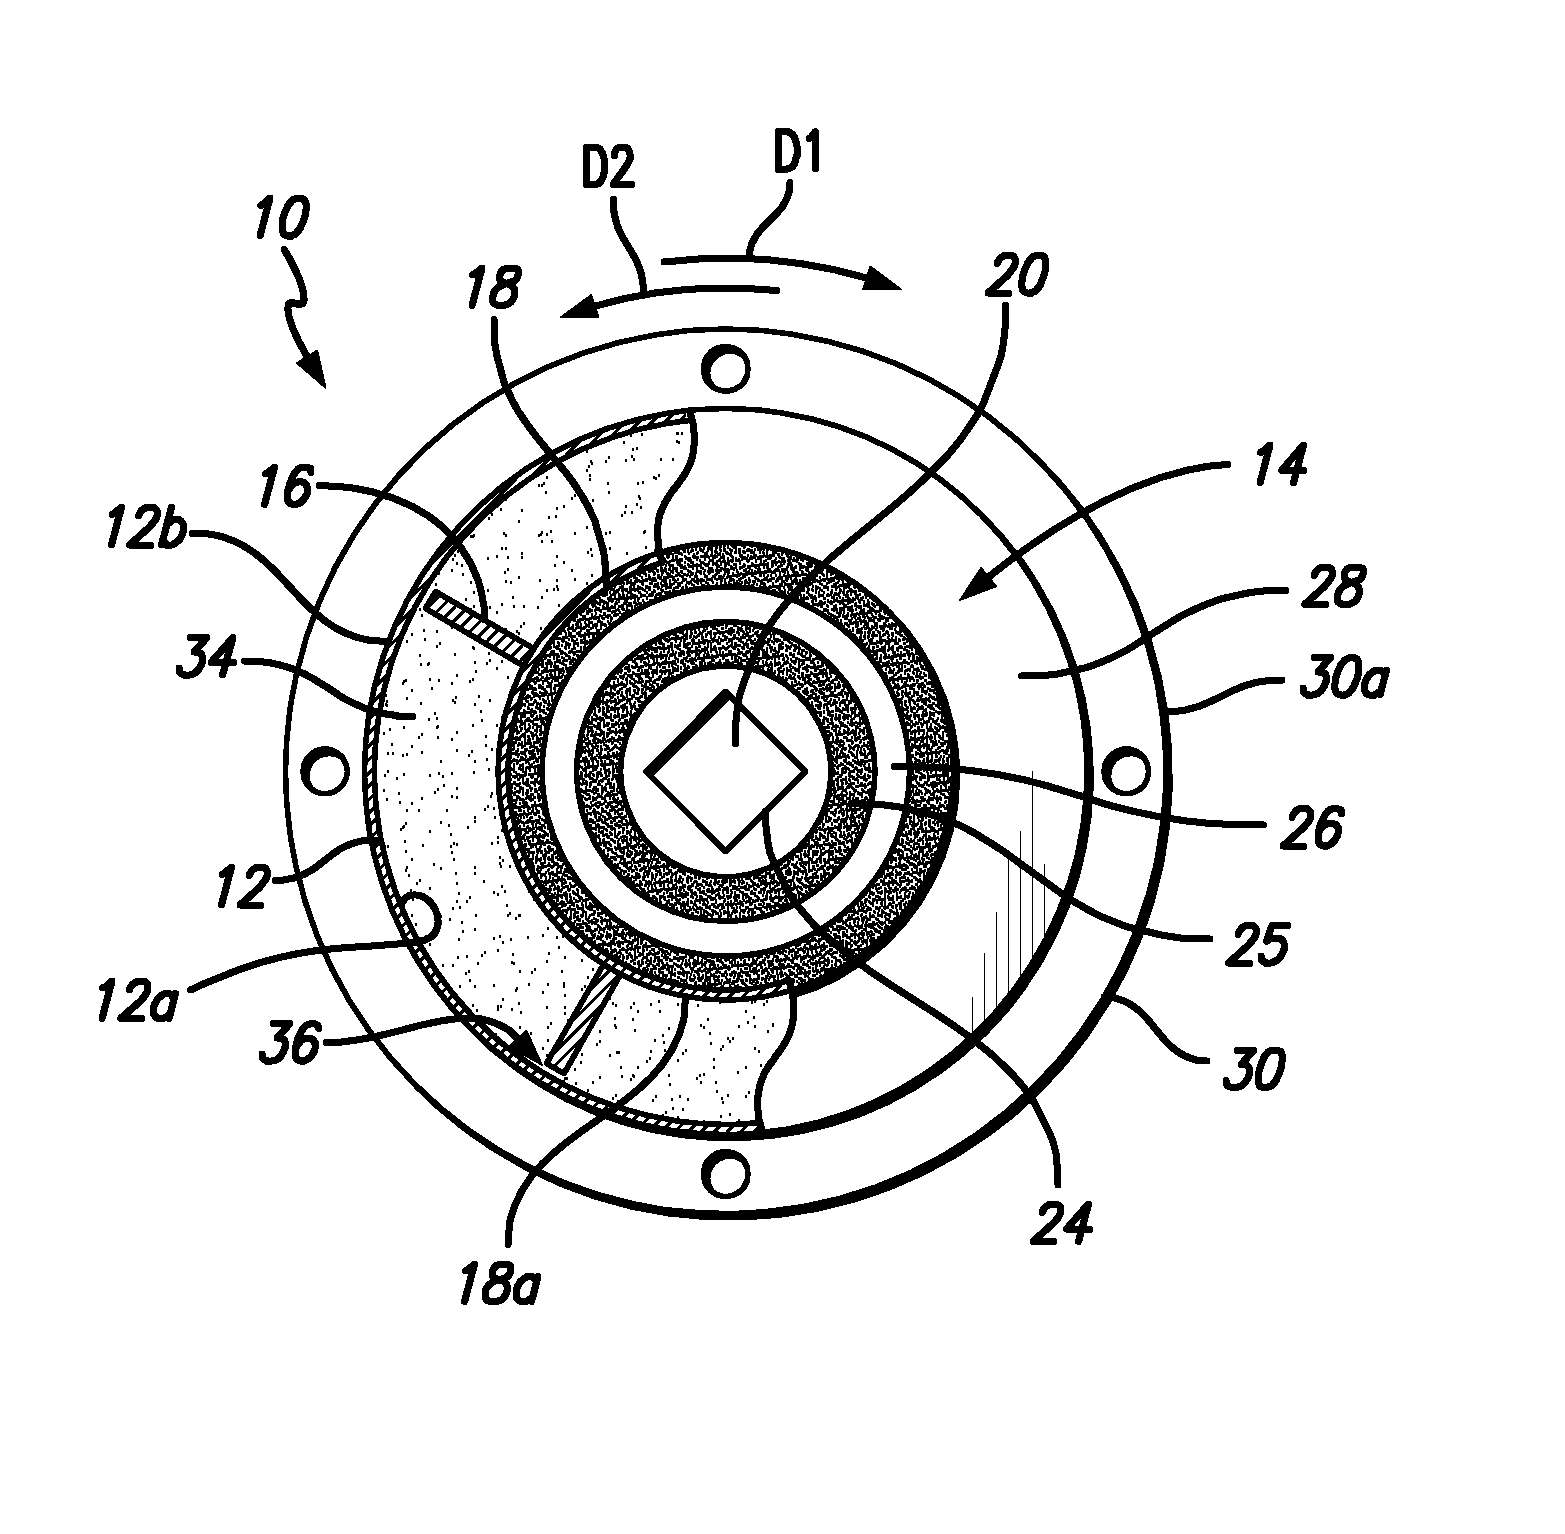 Freewheeling rotary damping mechanism